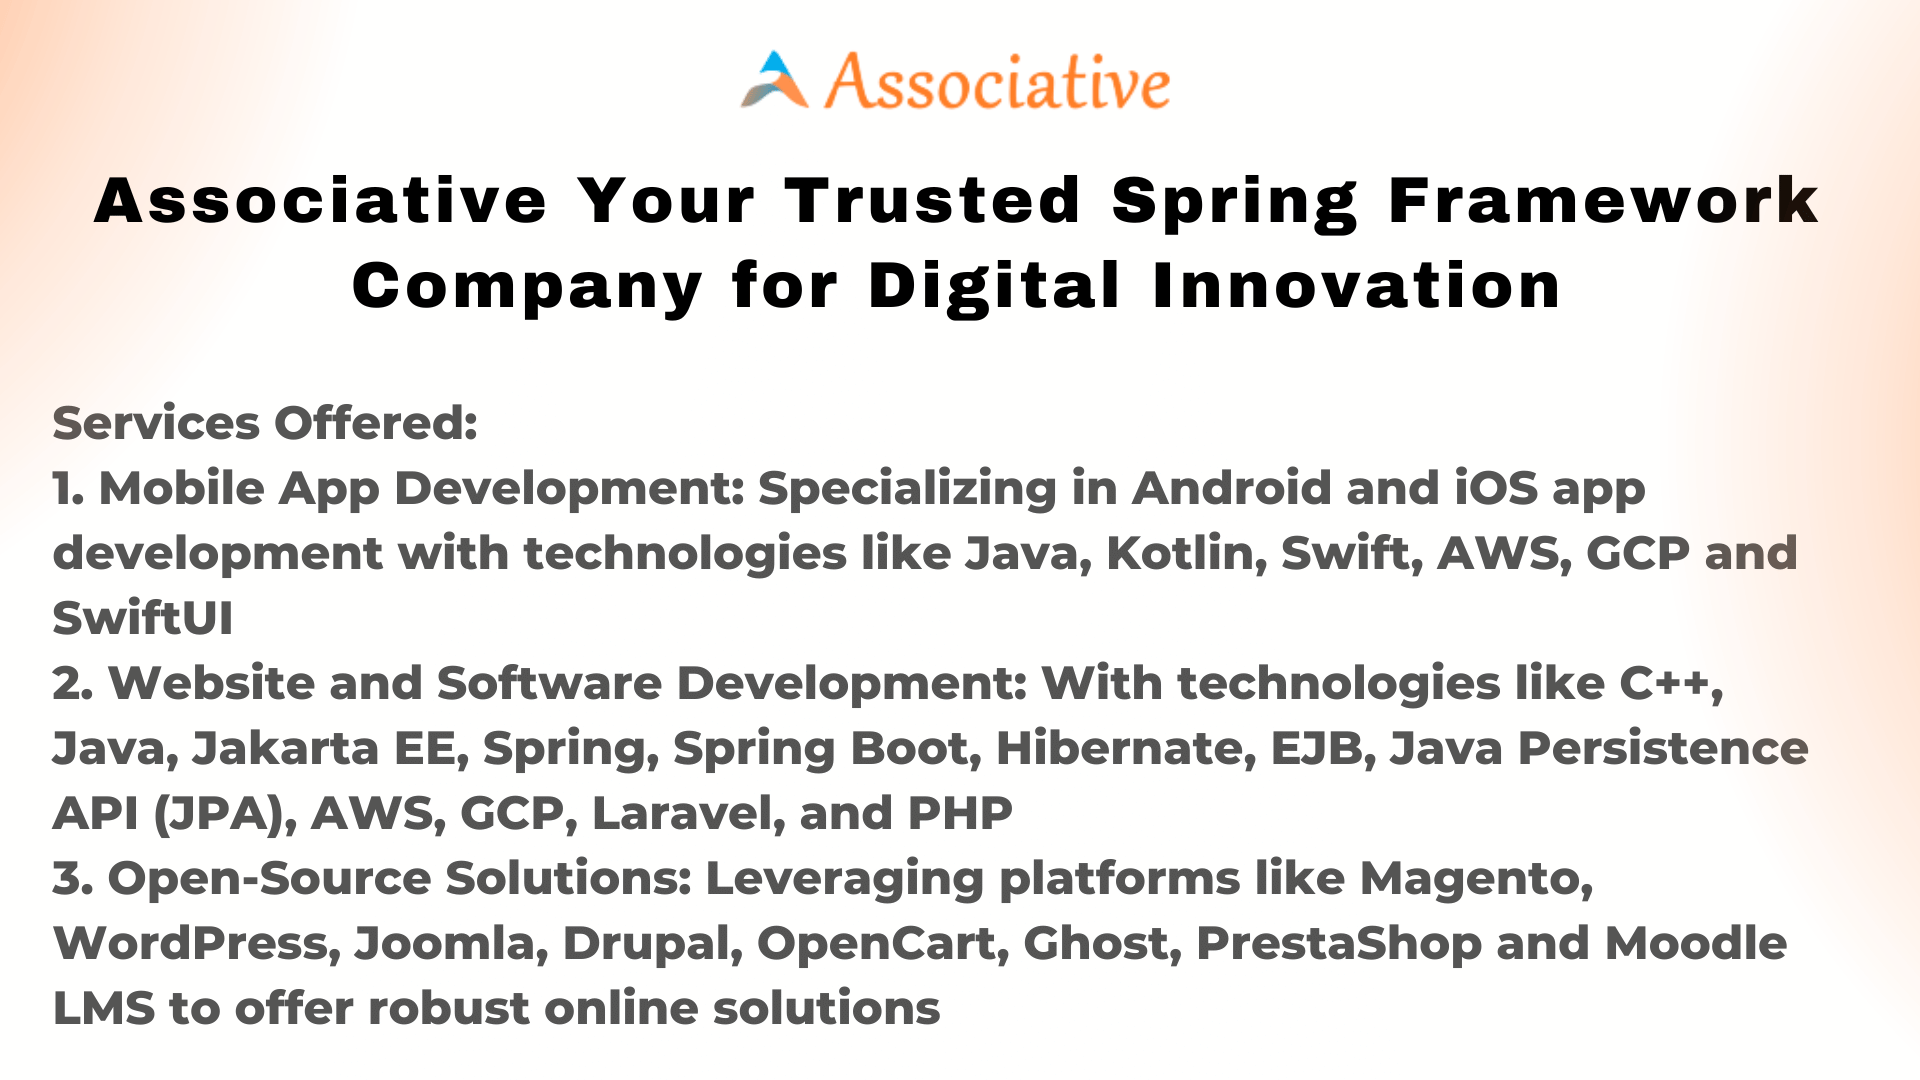 Associative Your Trusted Spring Framework Company for Digital Innovation